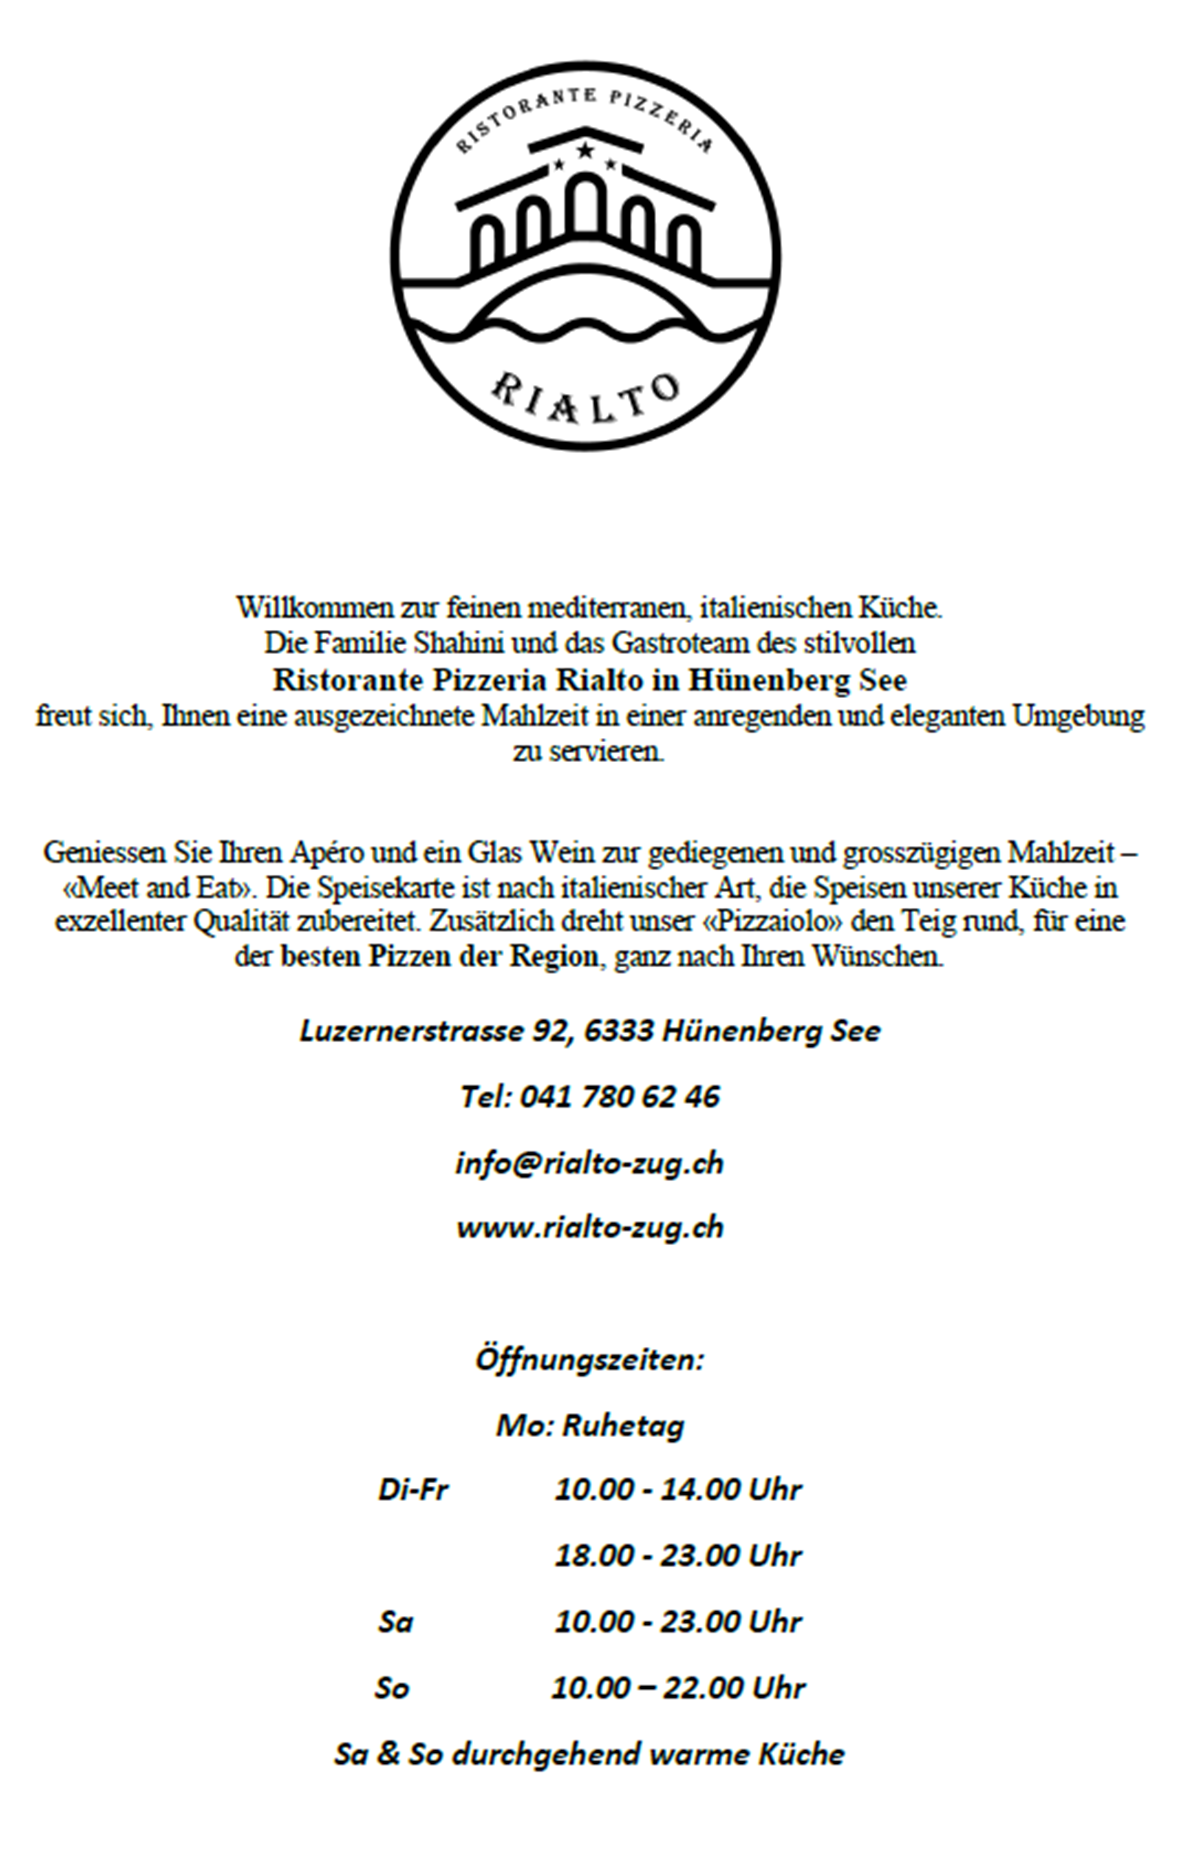 Rialto GmbH Hünenberg